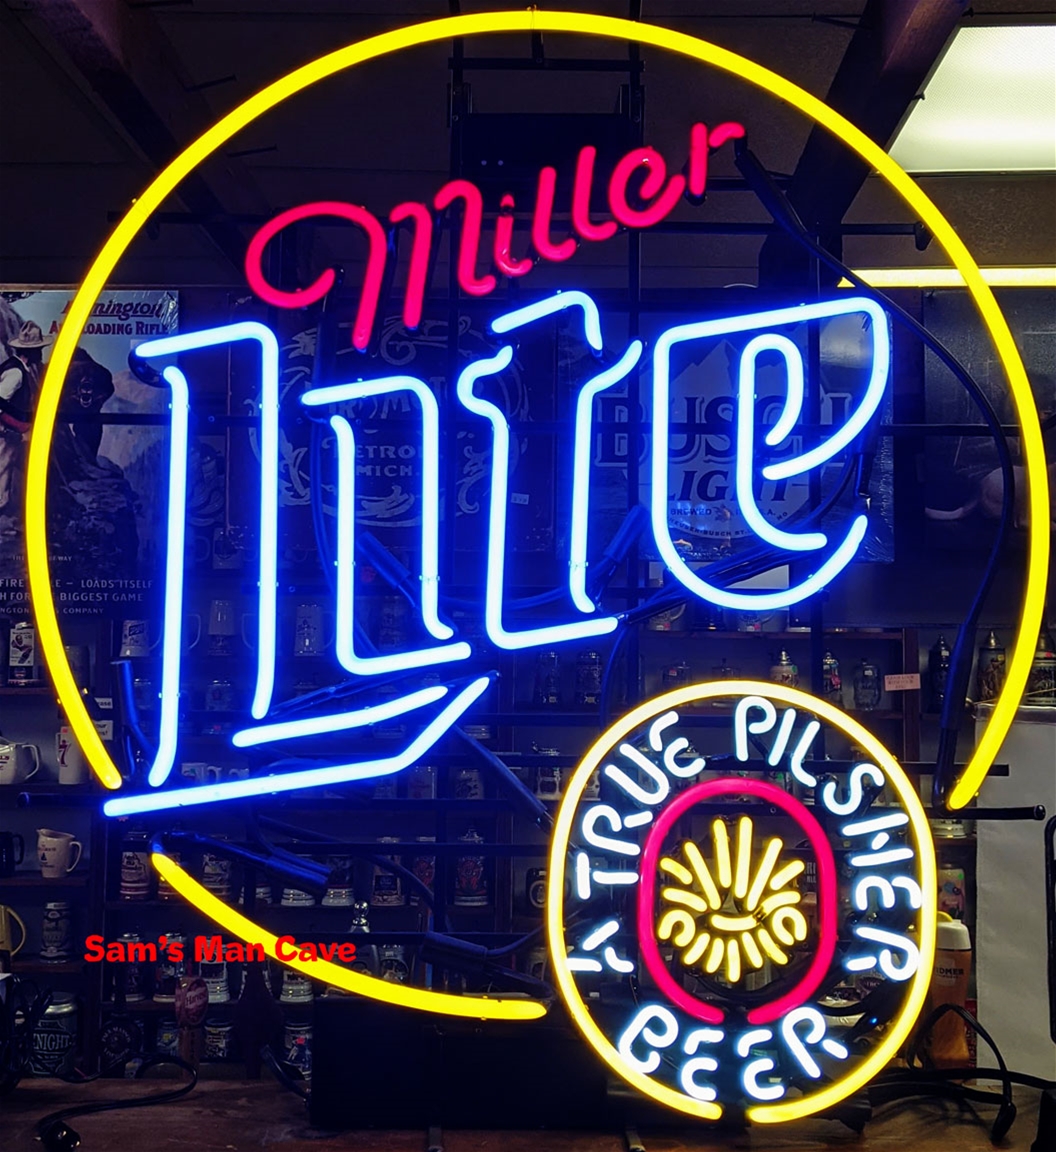 Miller Lite Neon